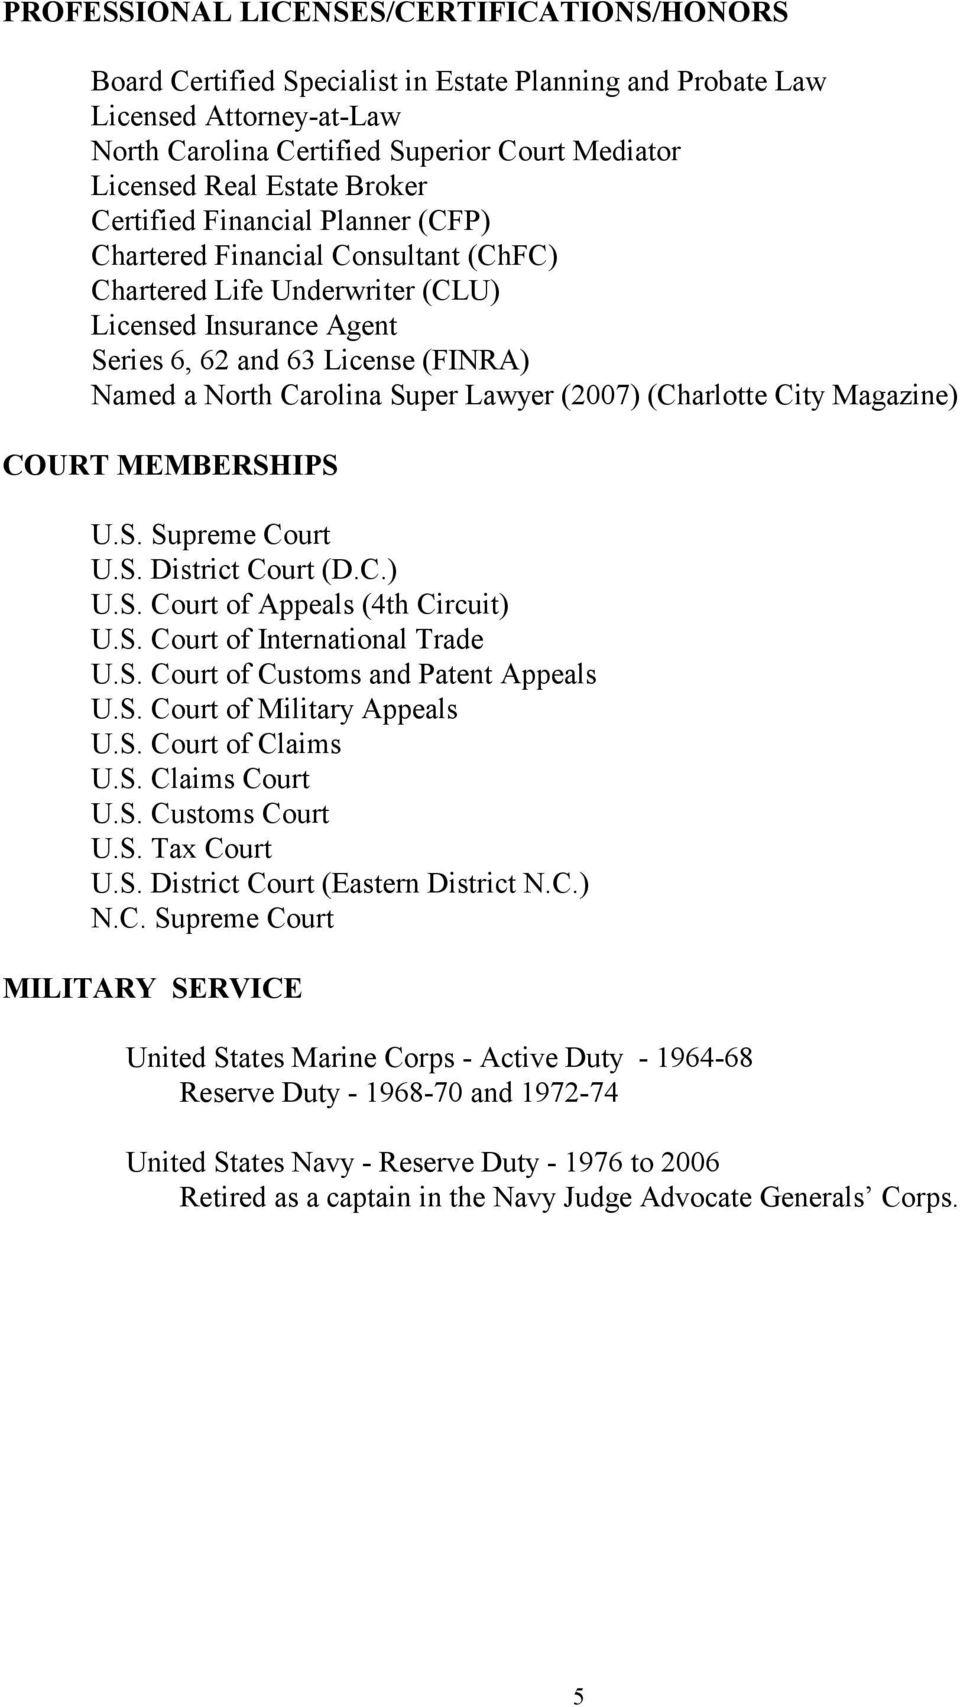 Carolina Super Lawyer (2007) (Charlotte City Magazine) COURT MEMBERSHIPS U.S. Supreme Court U.S. District Court (D.C.) U.S. Court of Appeals (4th Circuit) U.S. Court of International Trade U.S. Court of Customs and Patent Appeals U.